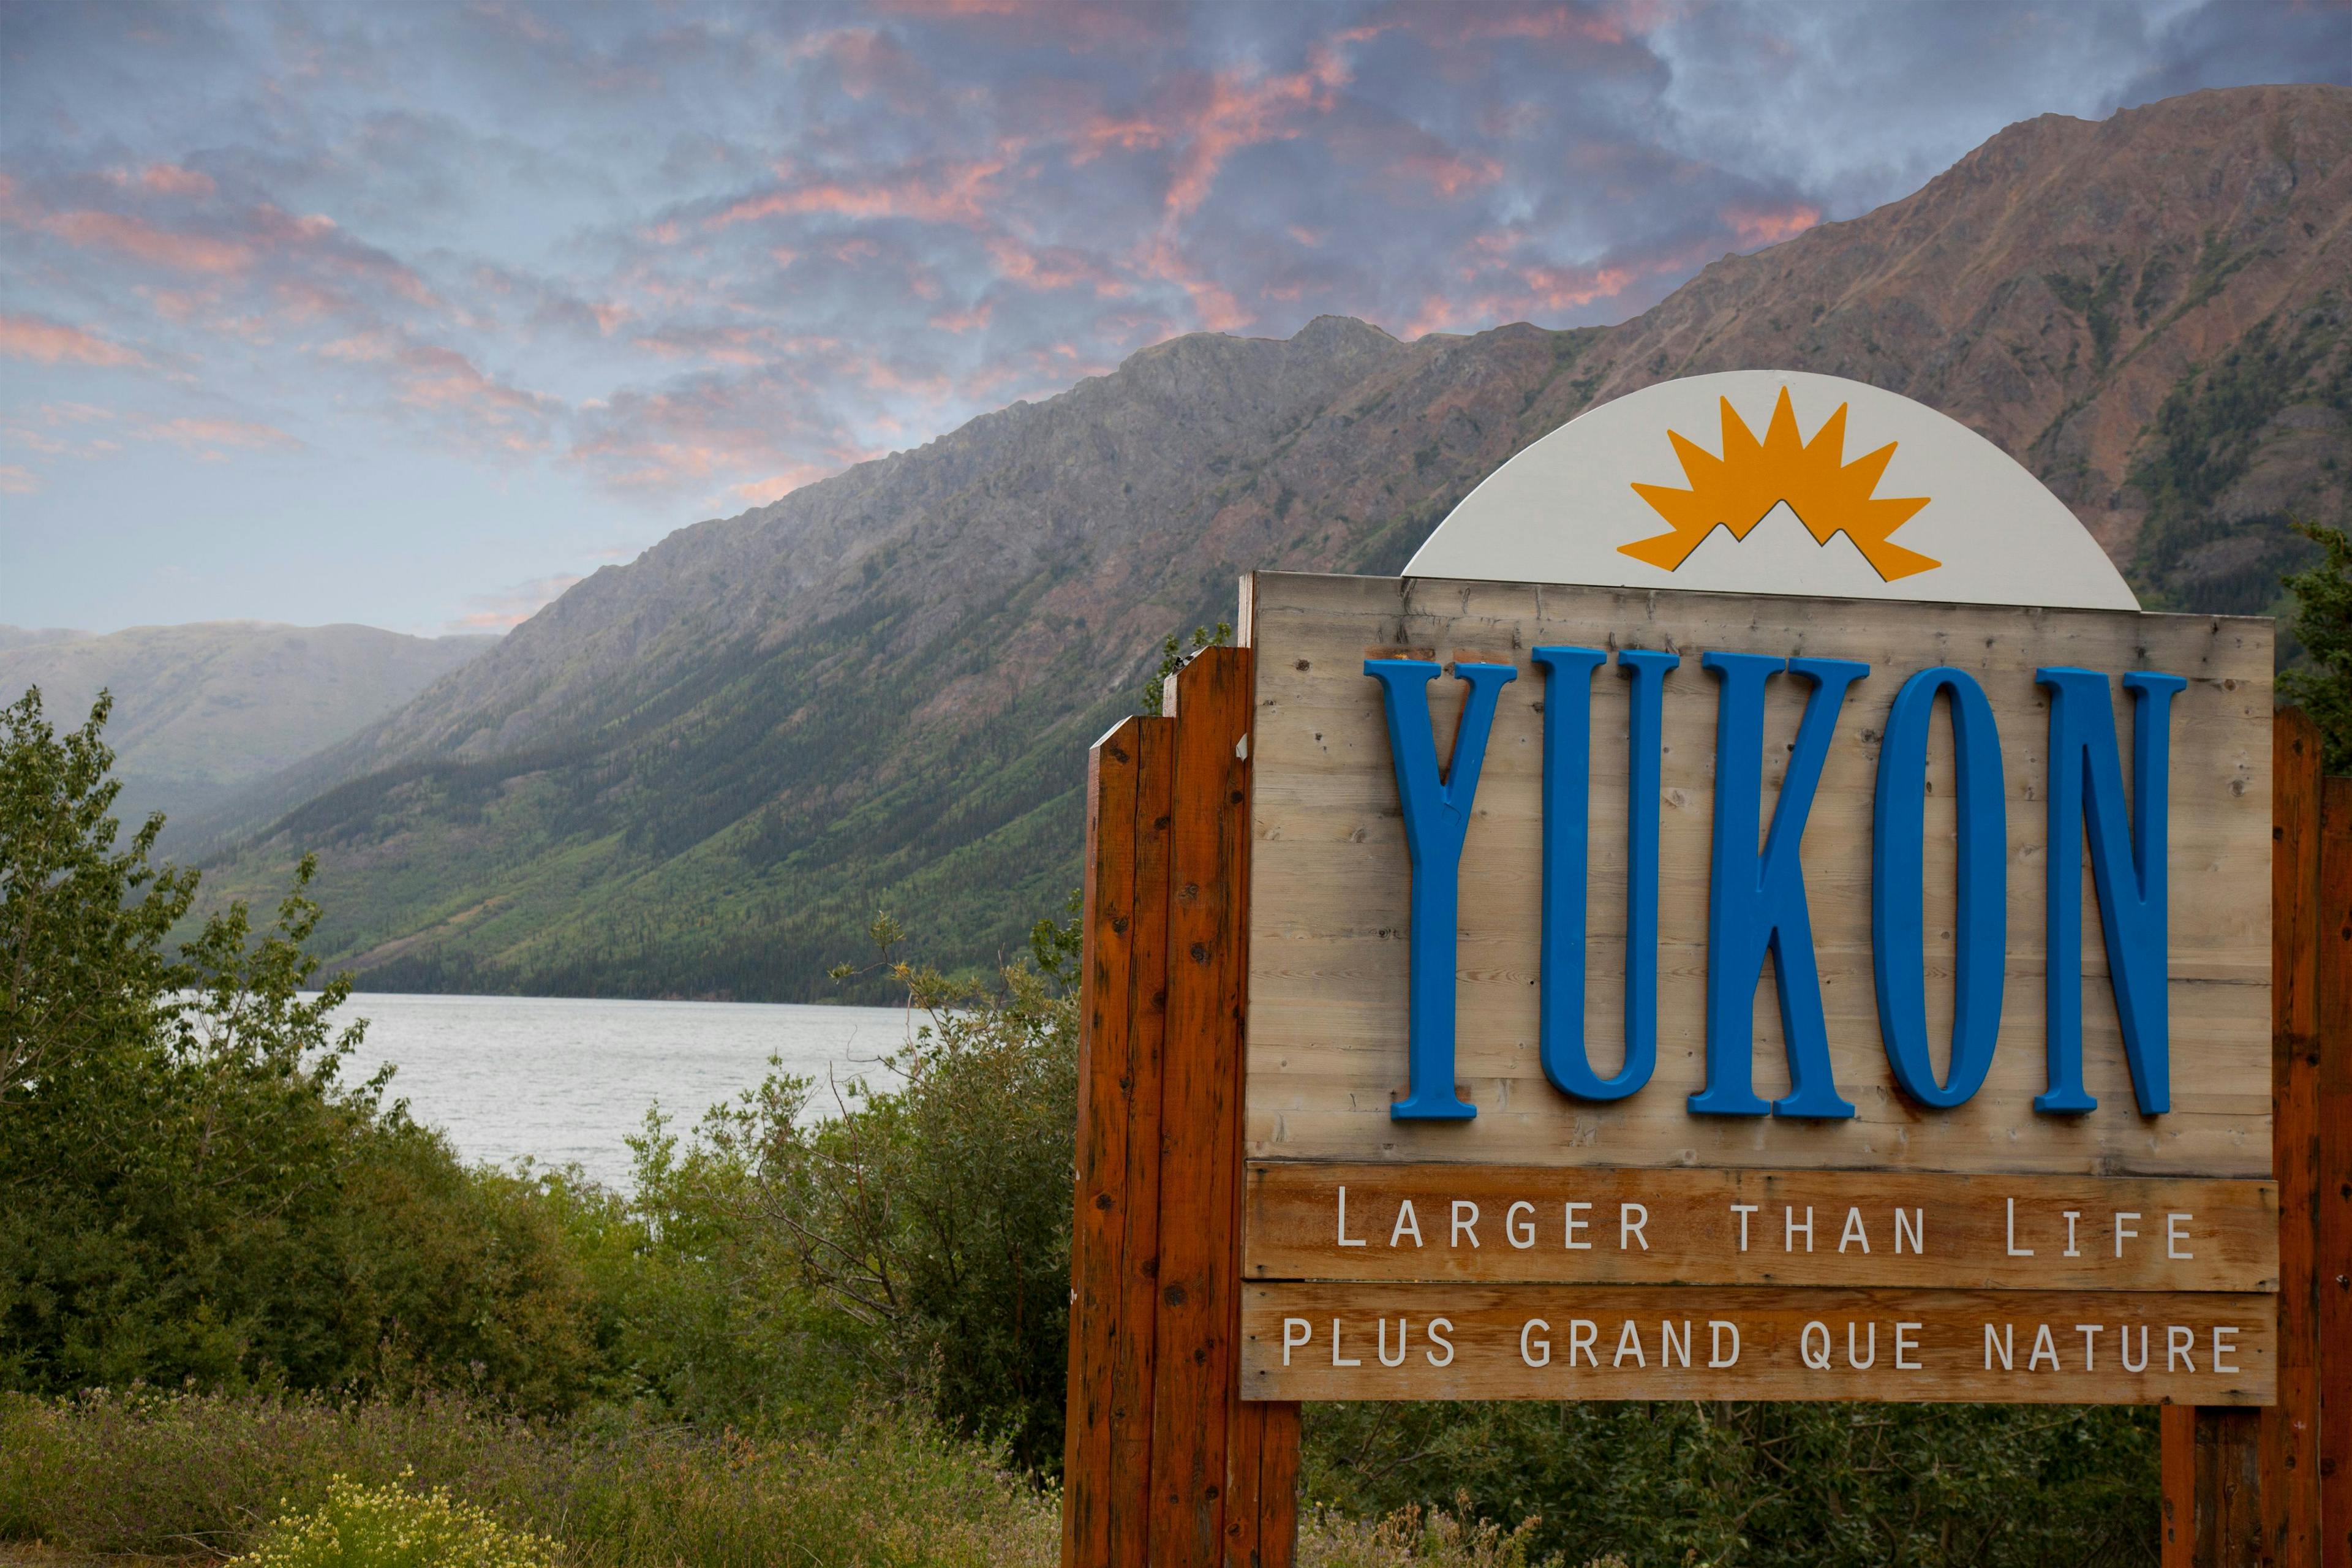 Mountains with sign saying Yukon Larger Than Life Plus Grand Que Nature | Image credit: nickjene - stock.adobe.com.